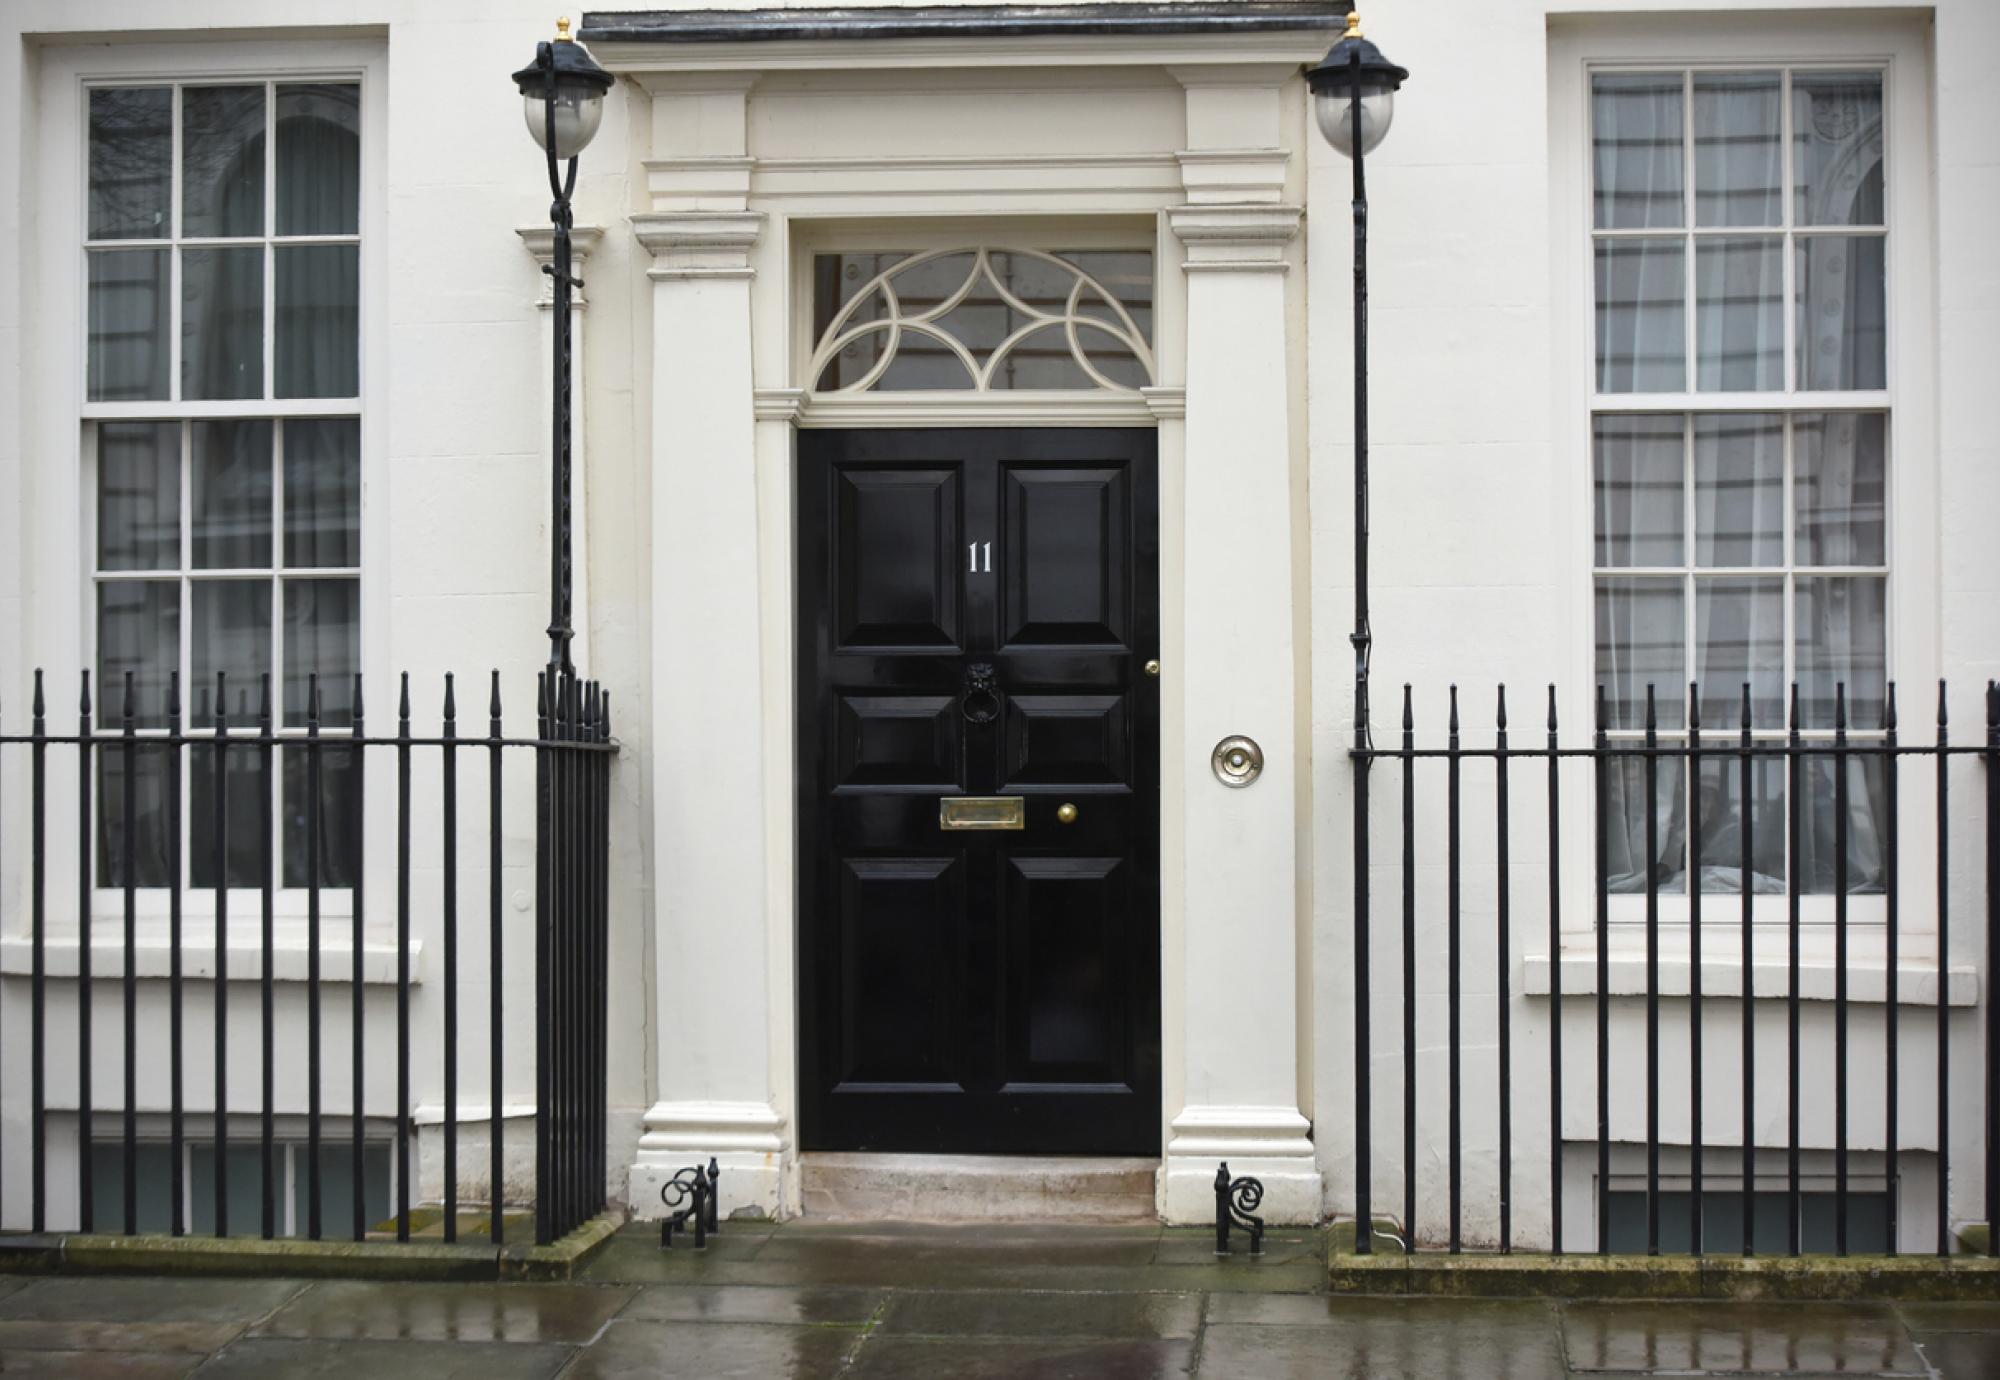 The door to 11, Downing Street